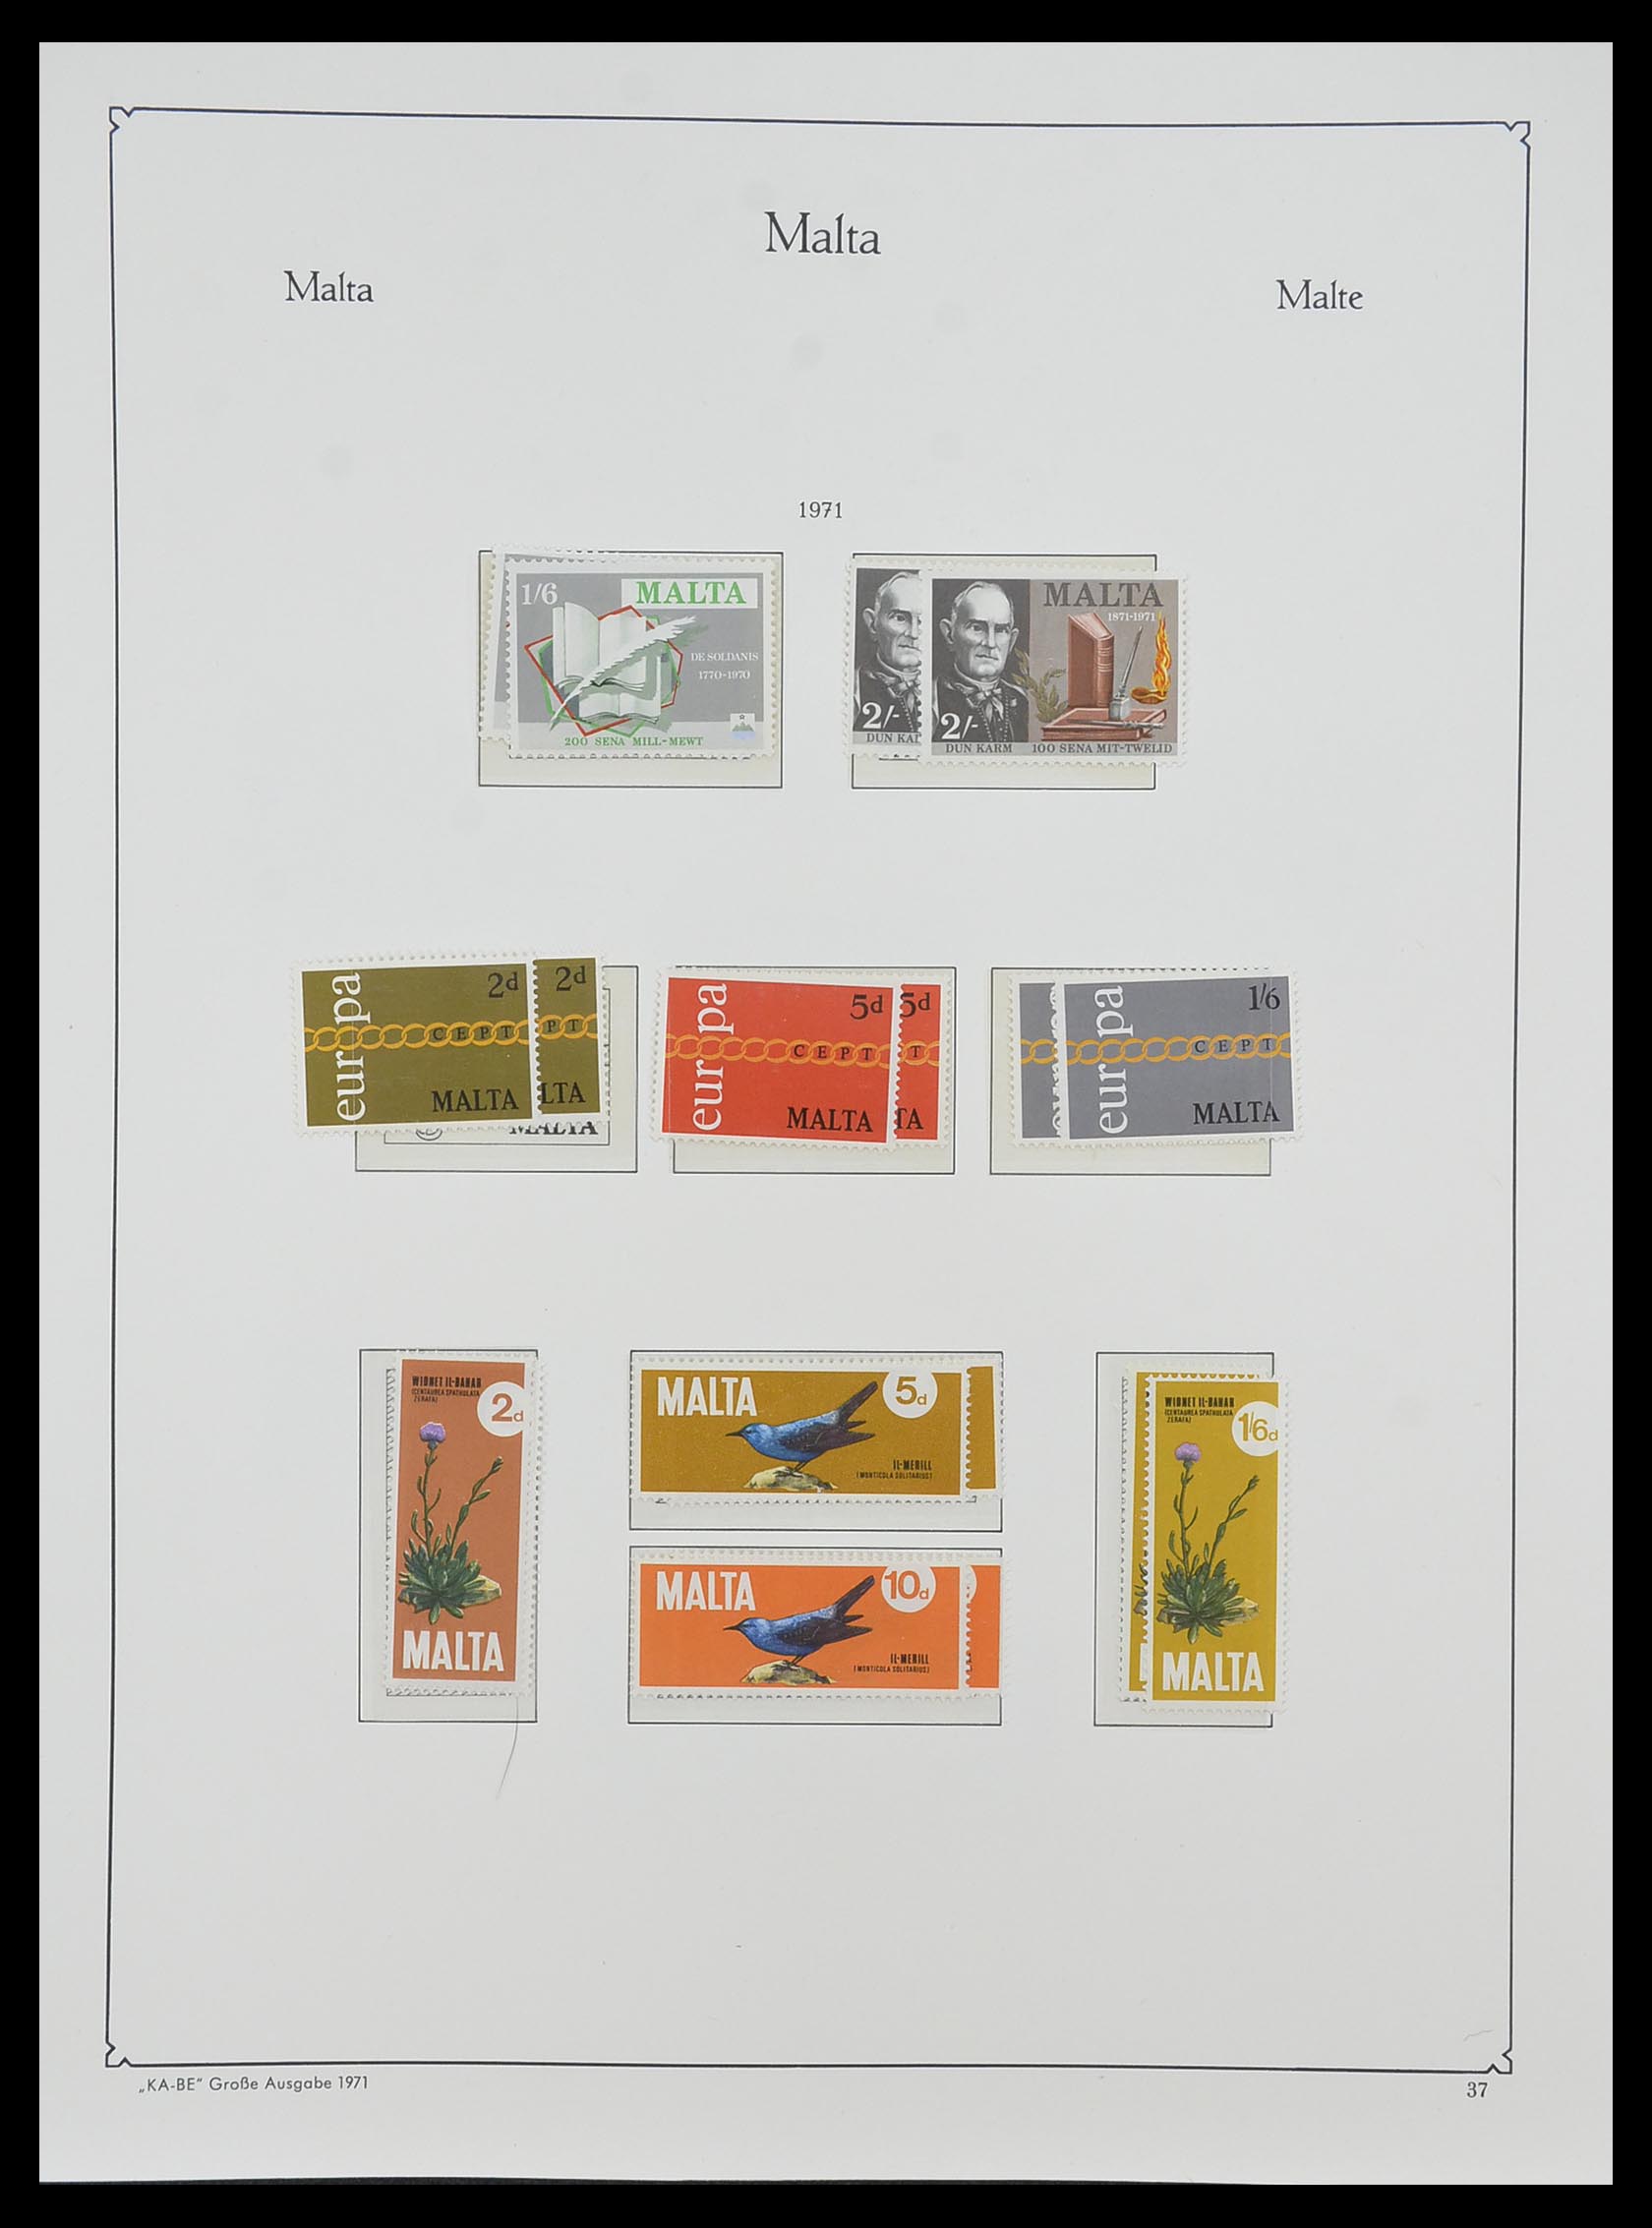 33968 106 - Stamp collection 33968 Malta 1861-2001.